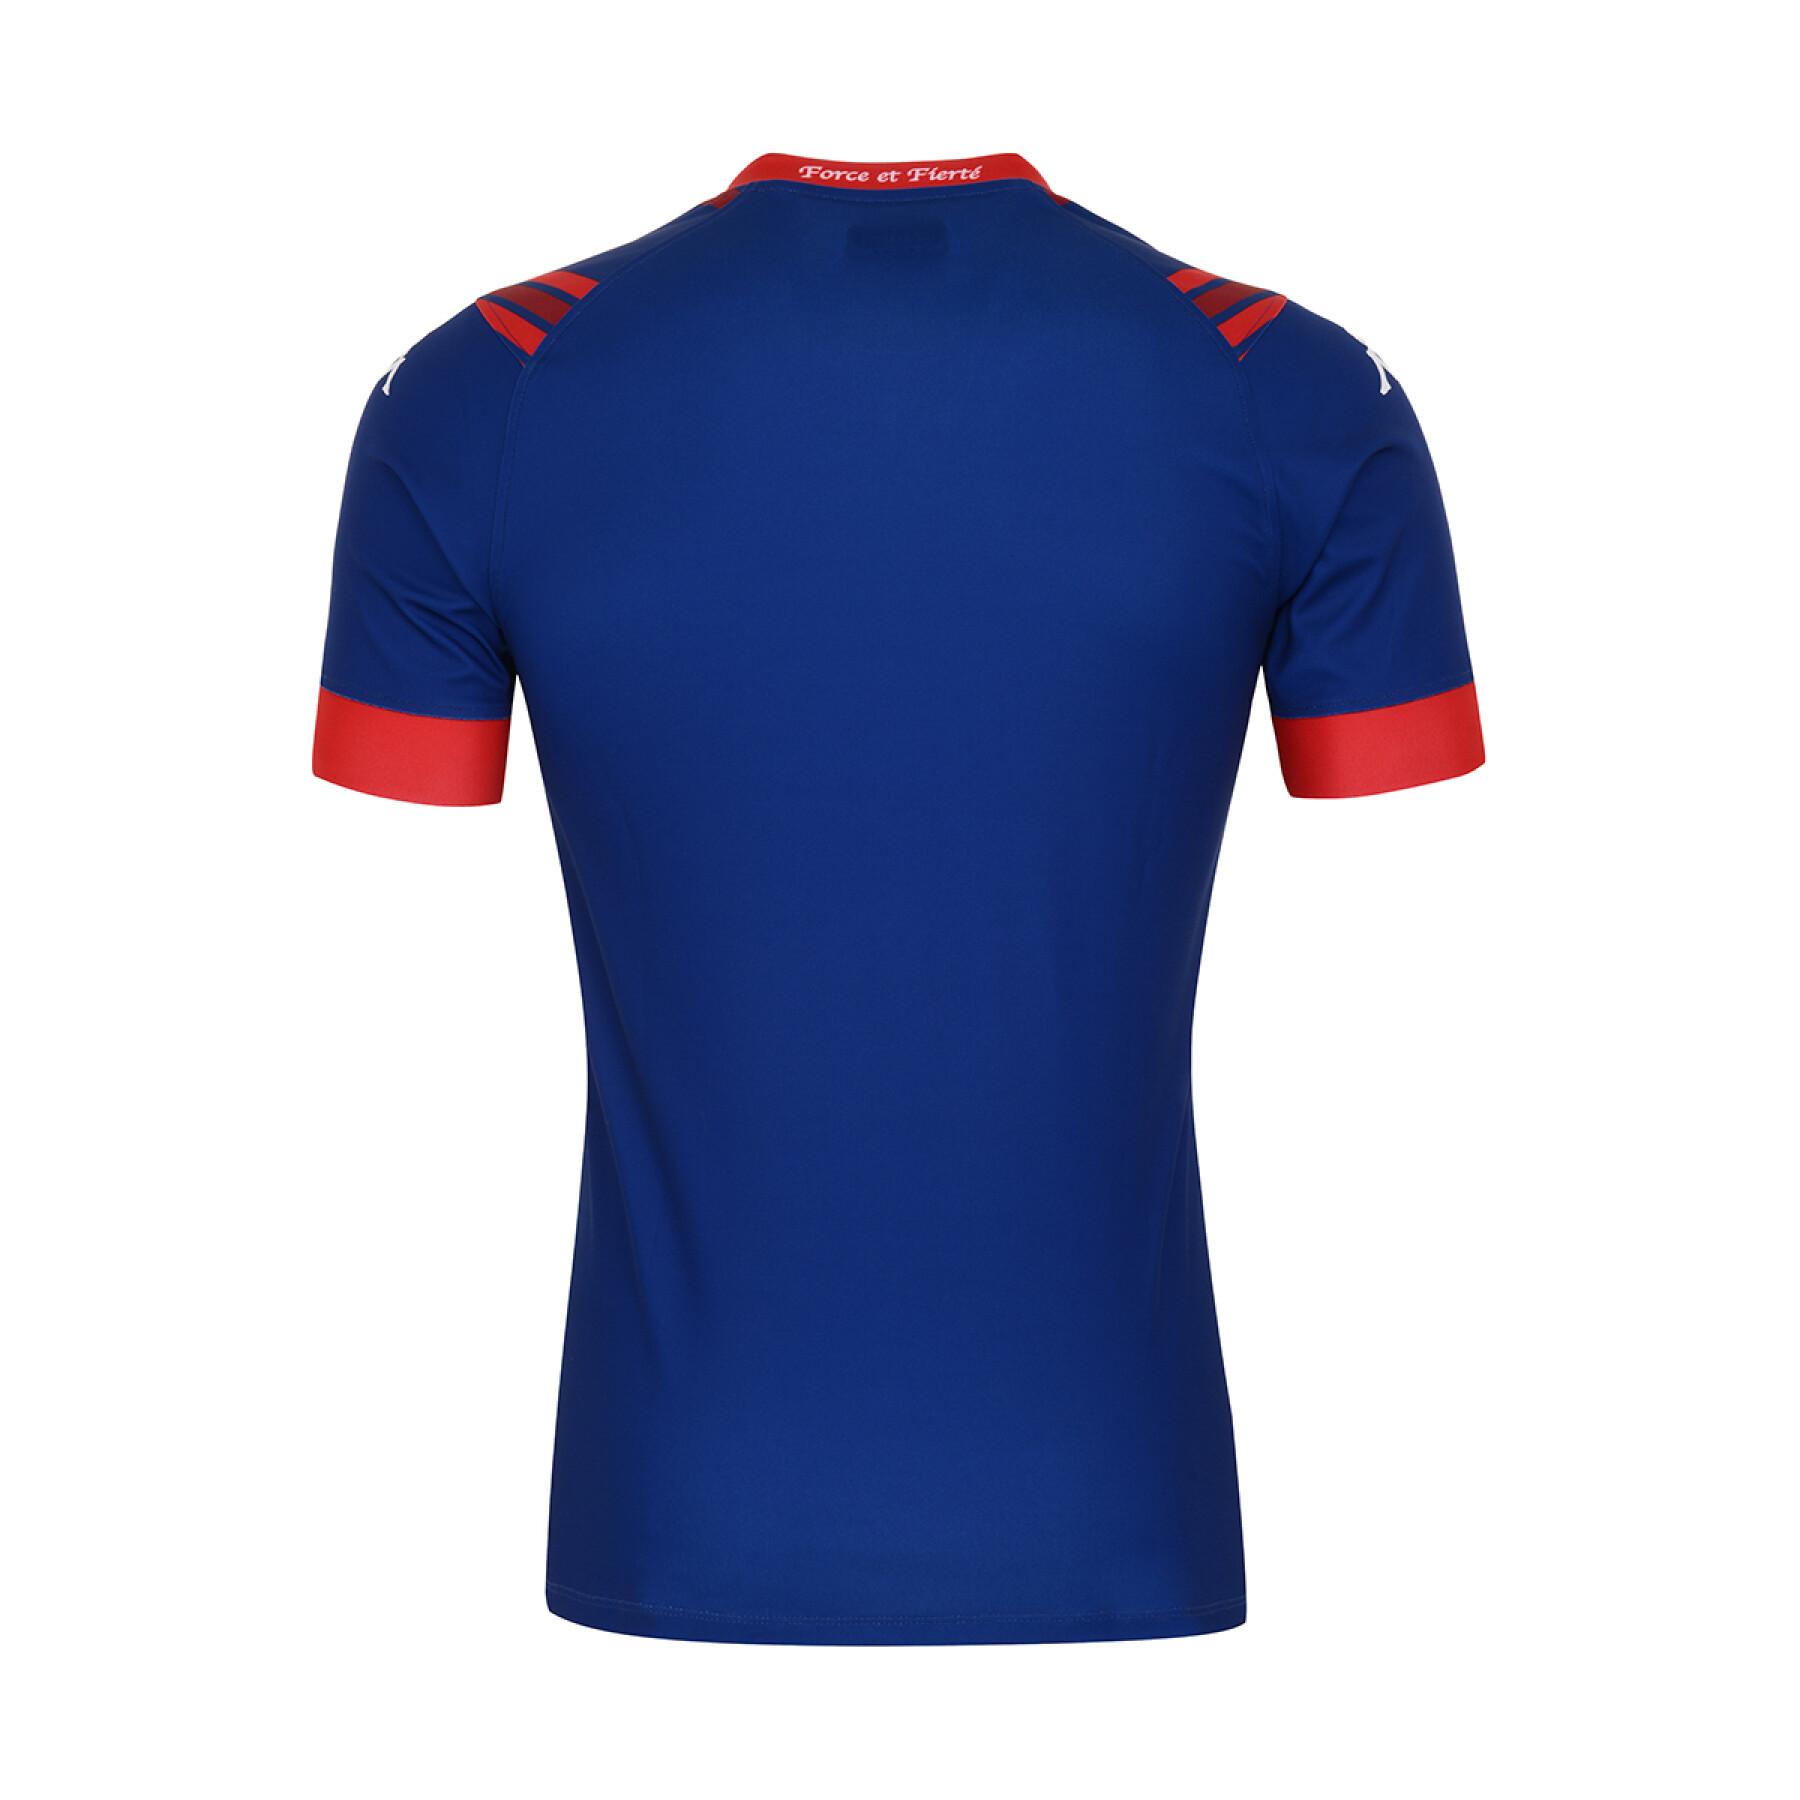 Camiseta home niños FC Grenoble Rugby 2020/21